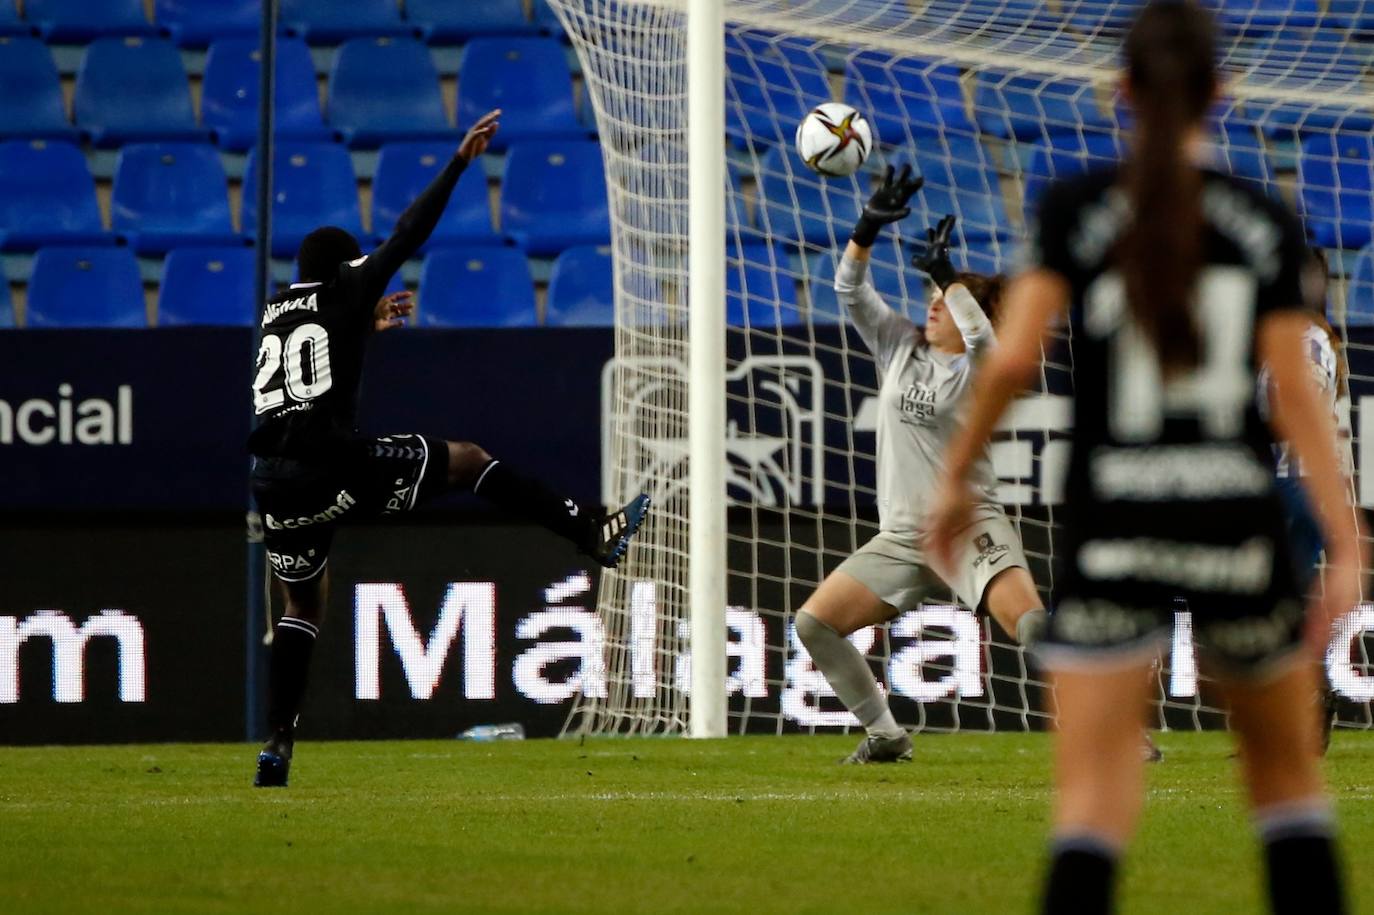 The match at La Rosaleda went to penalties, with Malaga beating Zaragoza 4-2